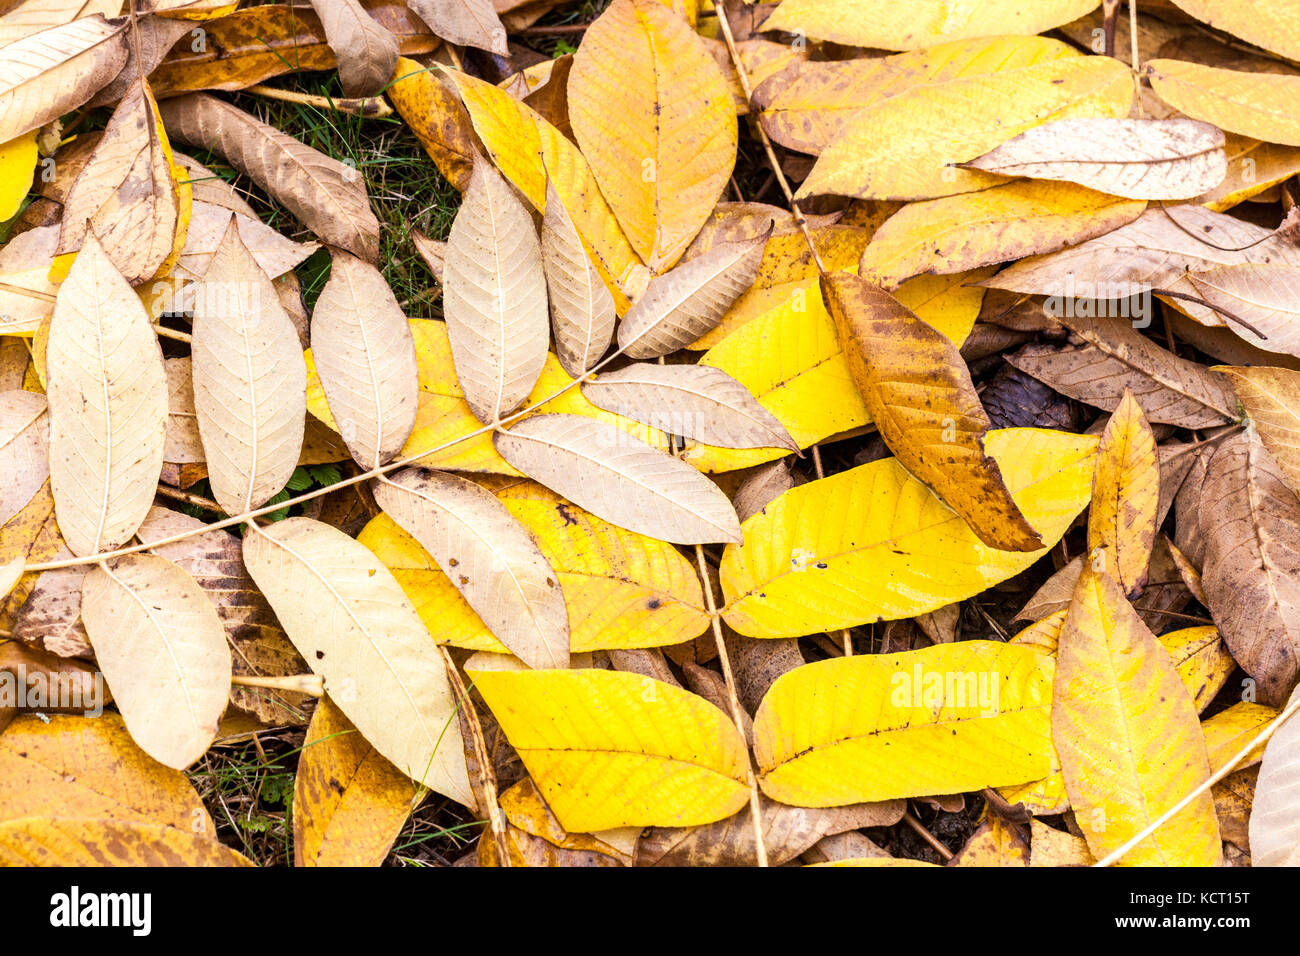 Juglans cathayensis, Chinese Walnut, yellow autumn fallen leaves Stock Photo